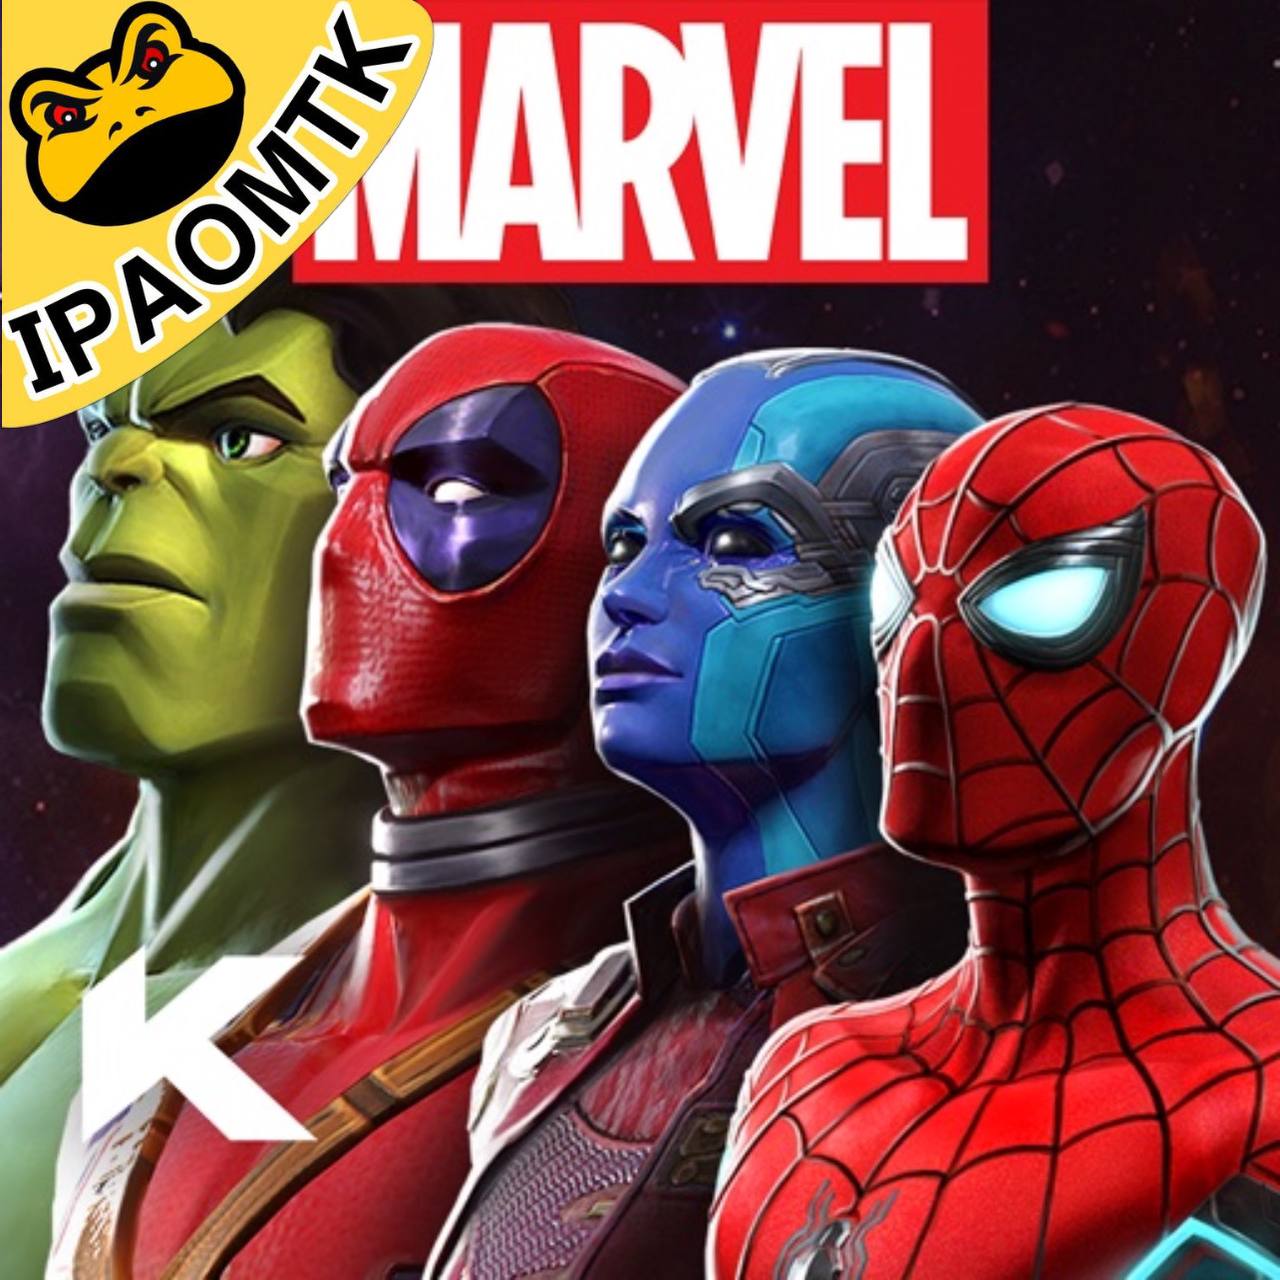 Marvel Contest of Champions